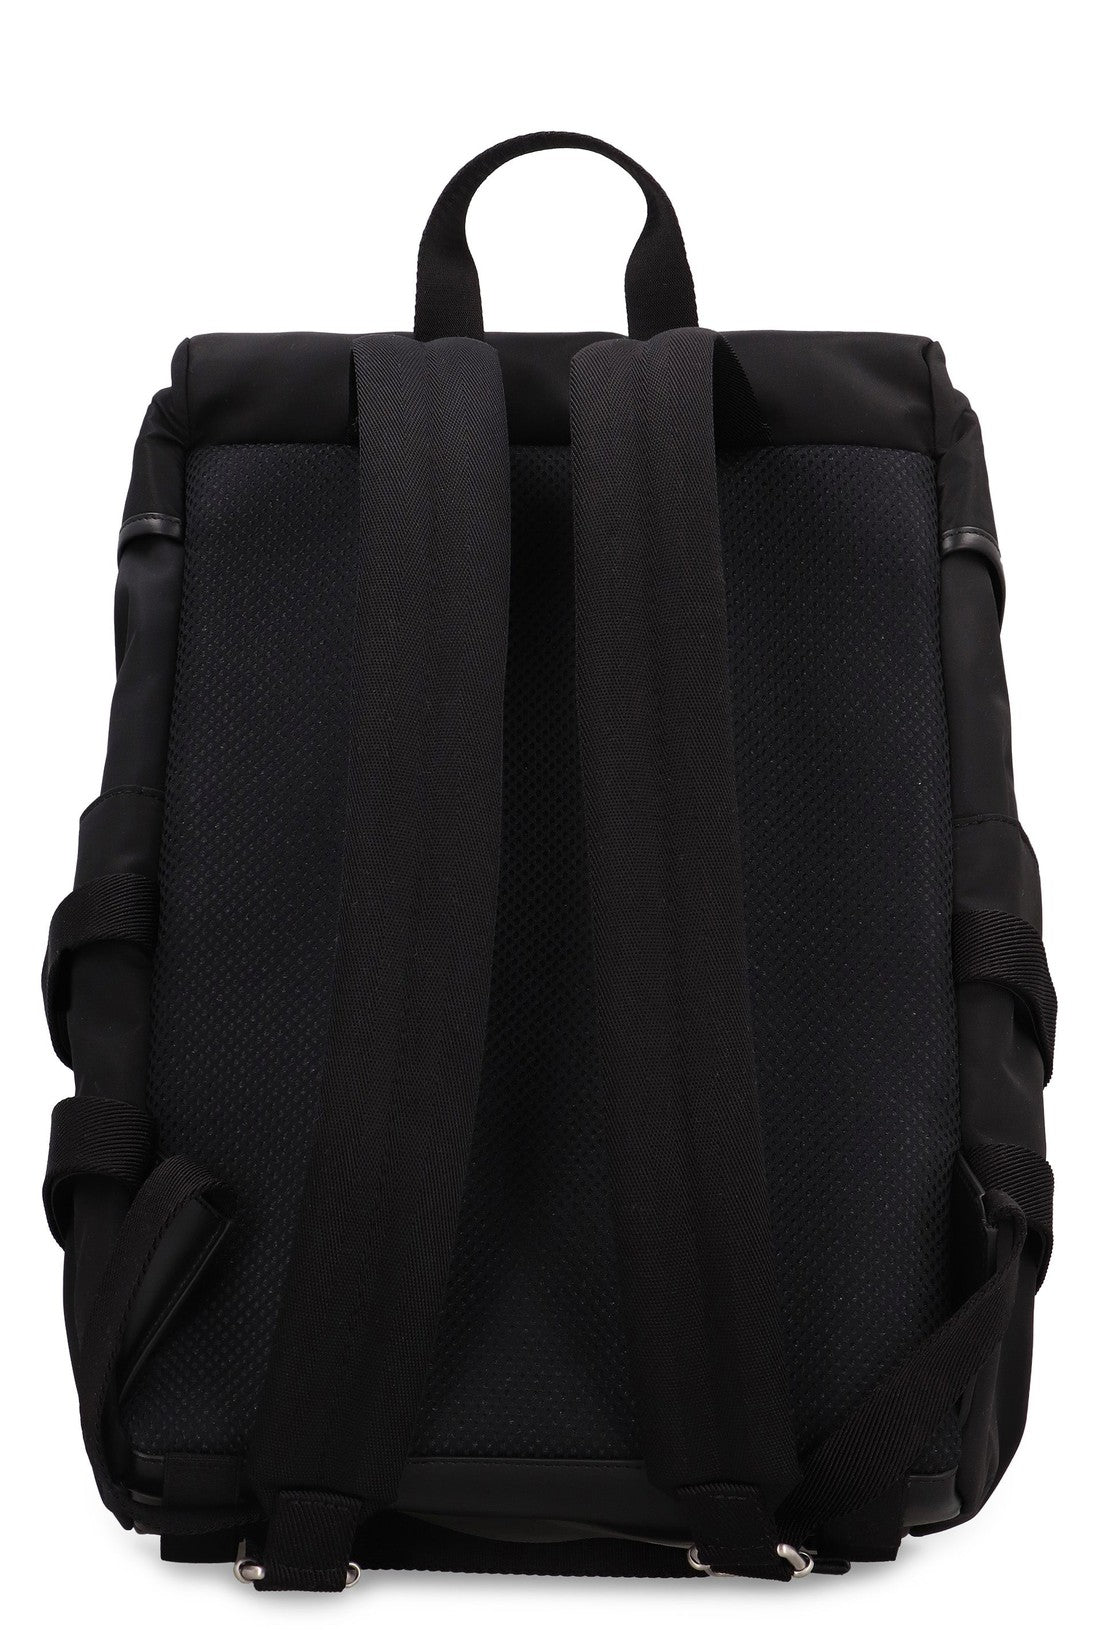 Off-White-OUTLET-SALE-Logo detail nylon backpack-ARCHIVIST